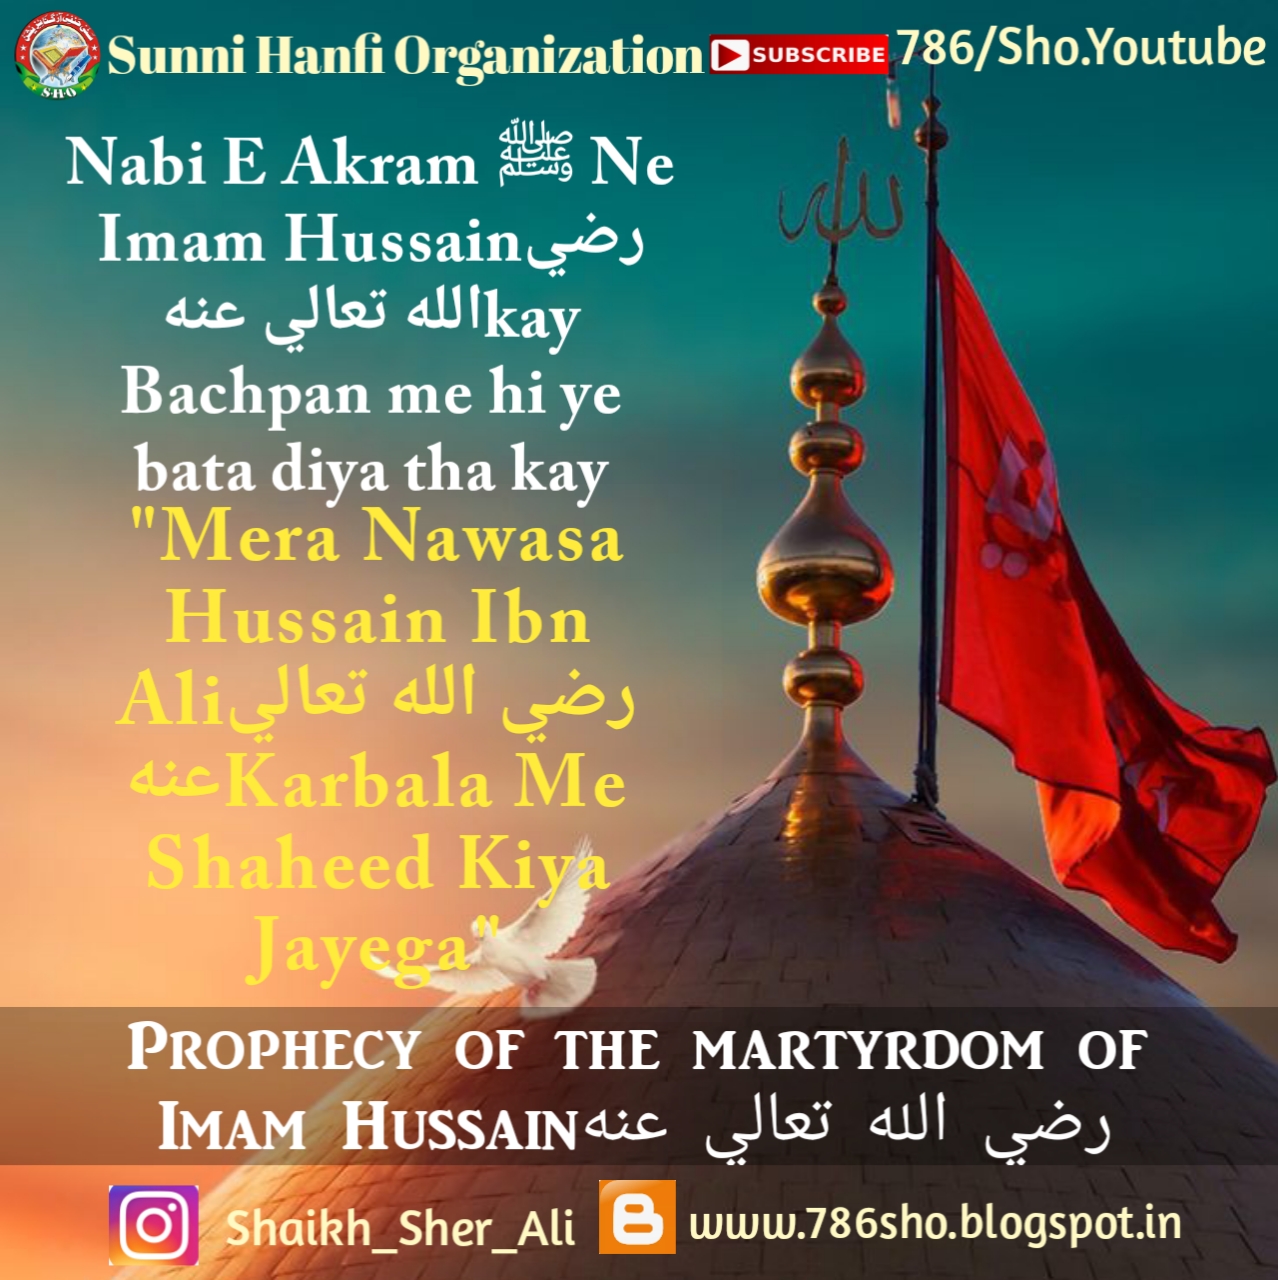 Prophecy of the martyrdom of Imam Hussain - Sunni Hanfi Organization